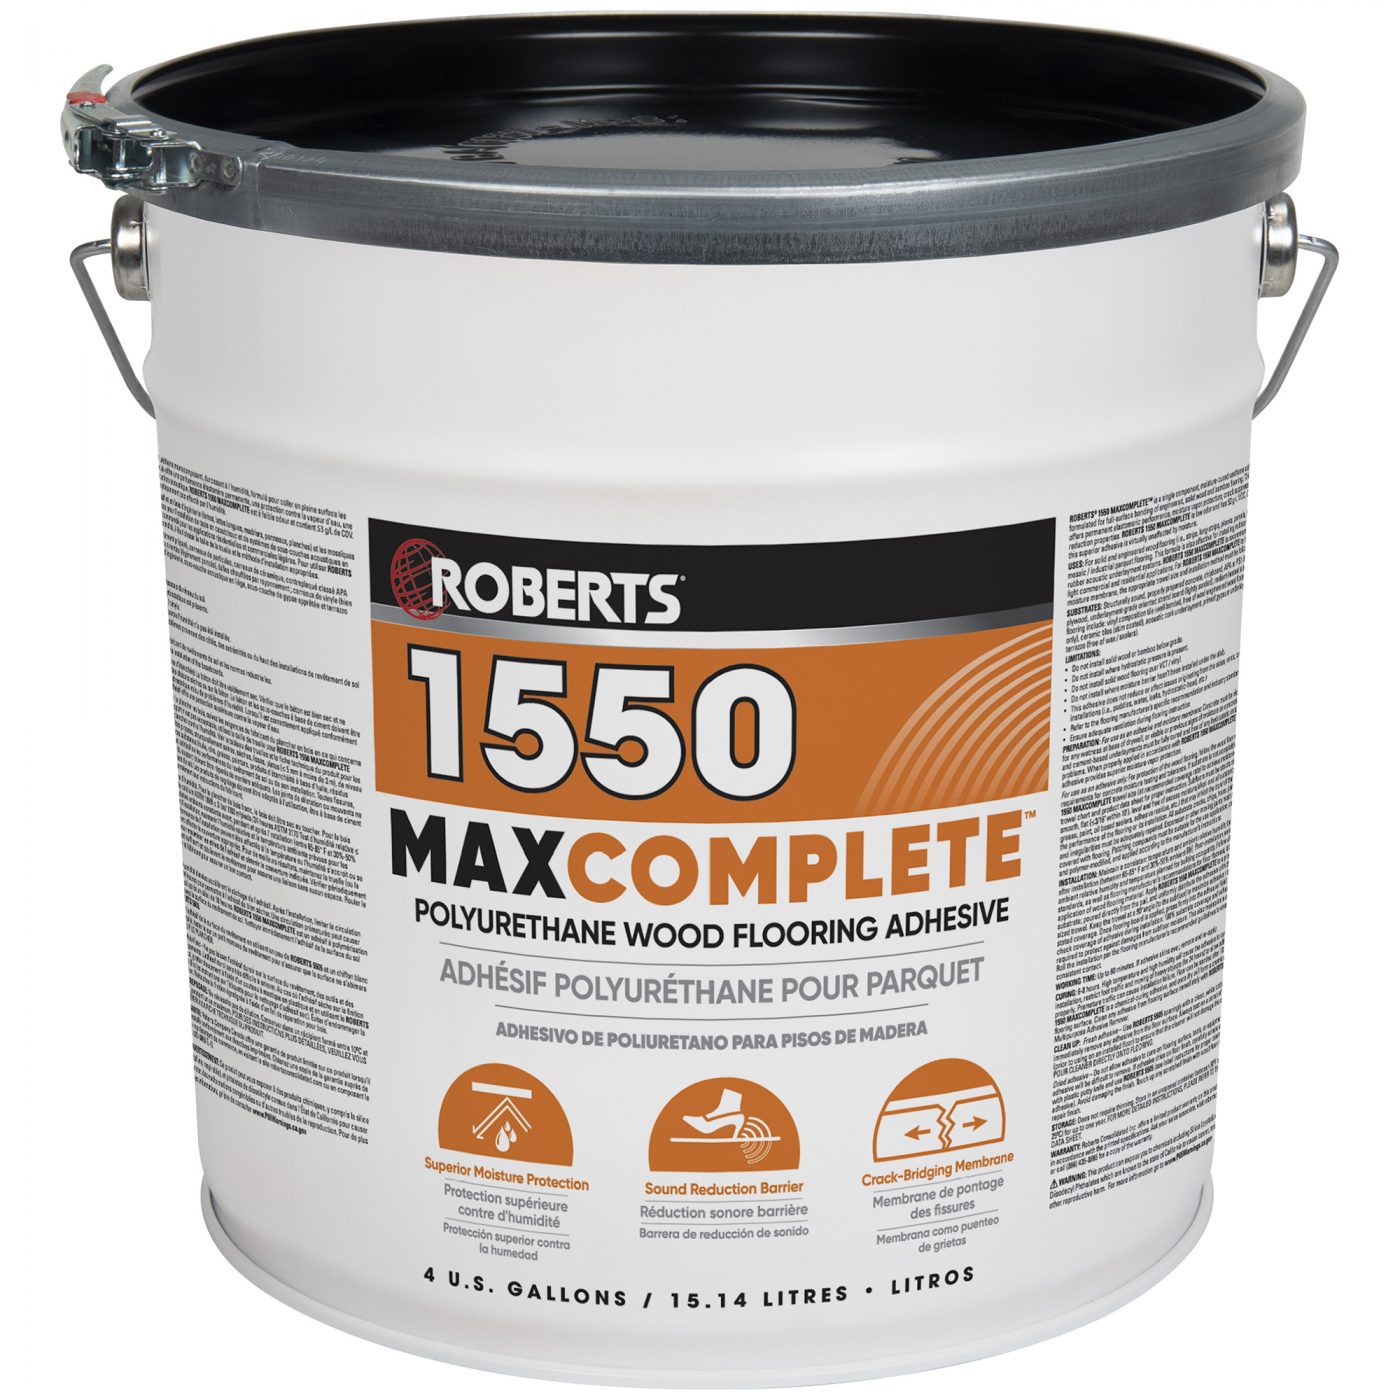 1550 MAXCOMPLETE Polyurethane Adhesive